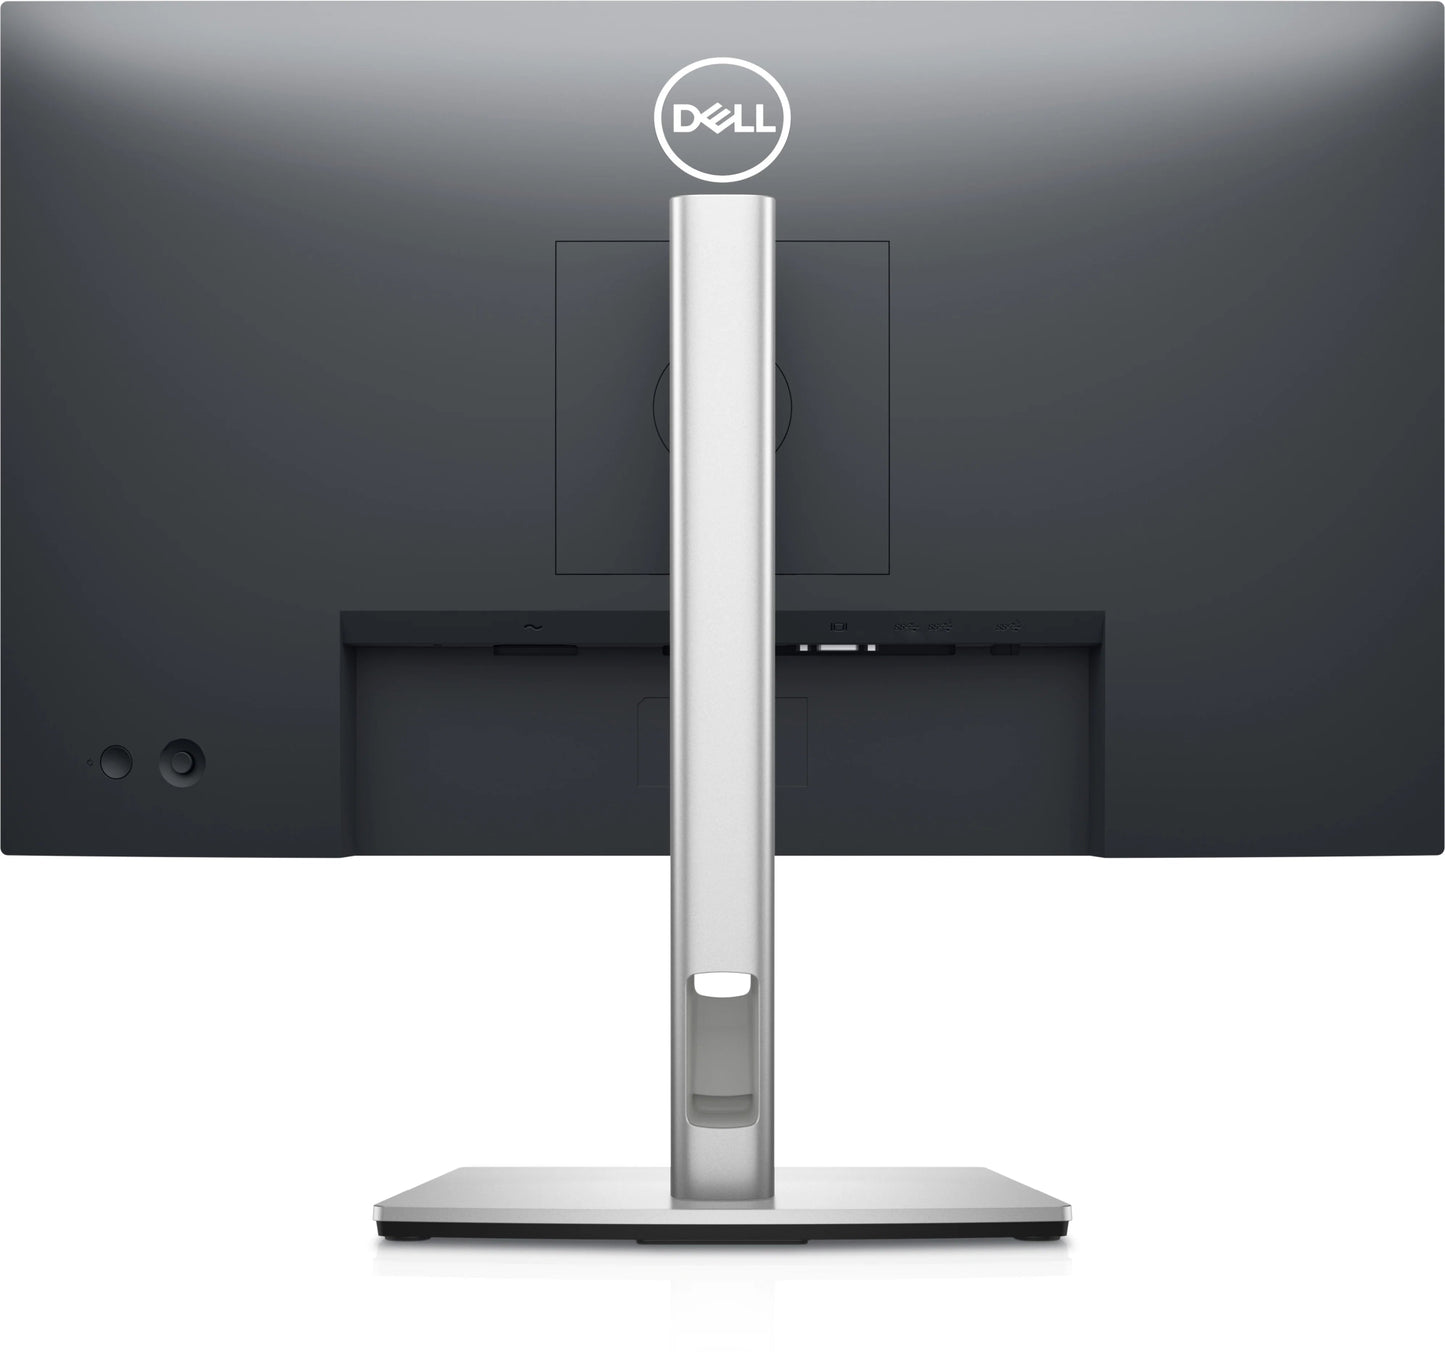 Dell P2422H 23.8" FHD Monitor, Height, Pivot (rotation), Swivel, Tilt, Black Color - Vertexhub Shop-Dell